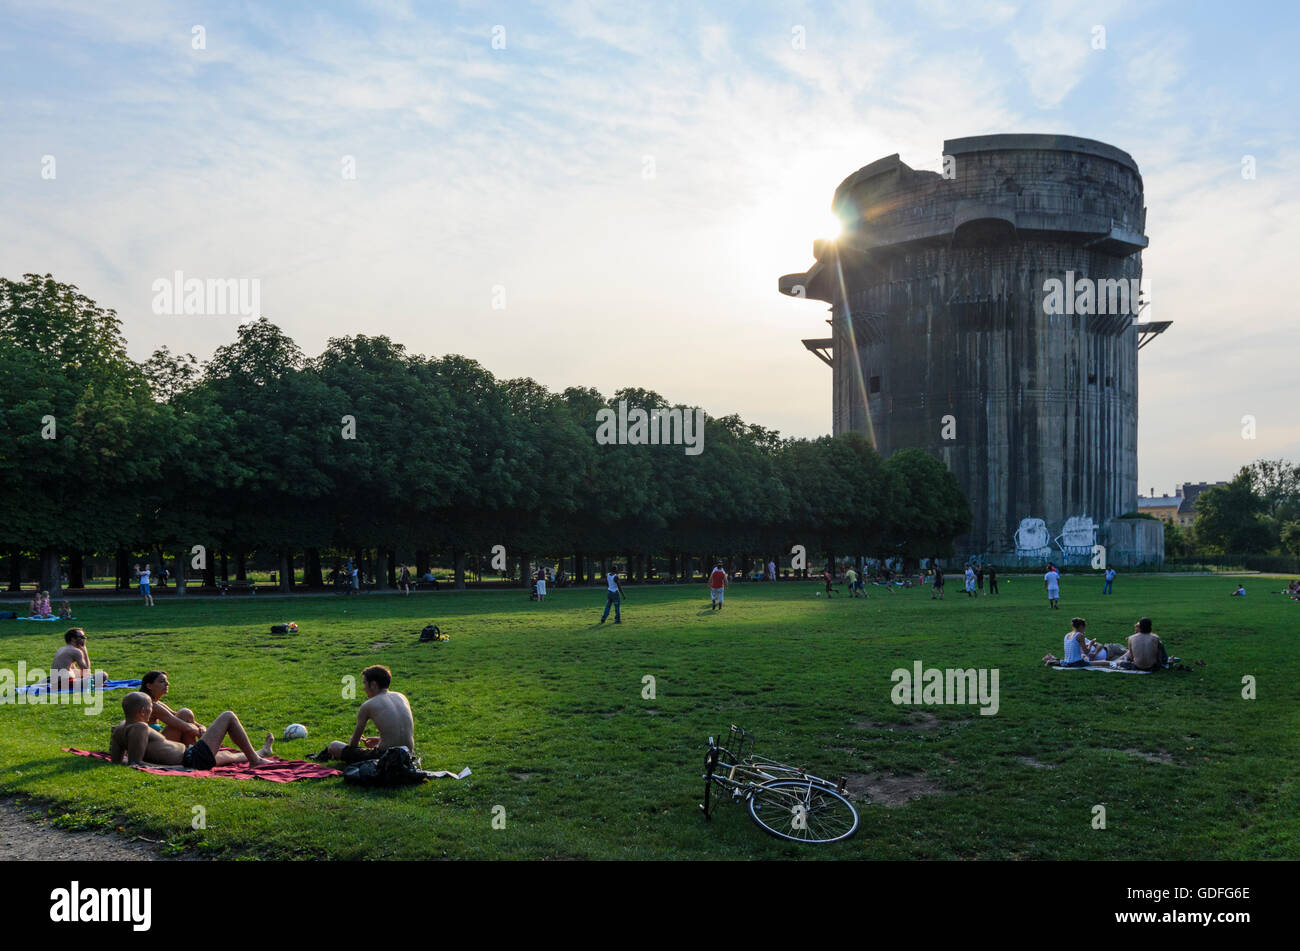 Wien, Vienna: Anti-aircraft flak tower (battle tower) in the Augarten, picnic, people picnicking, Austria, Wien, 02. Stock Photo